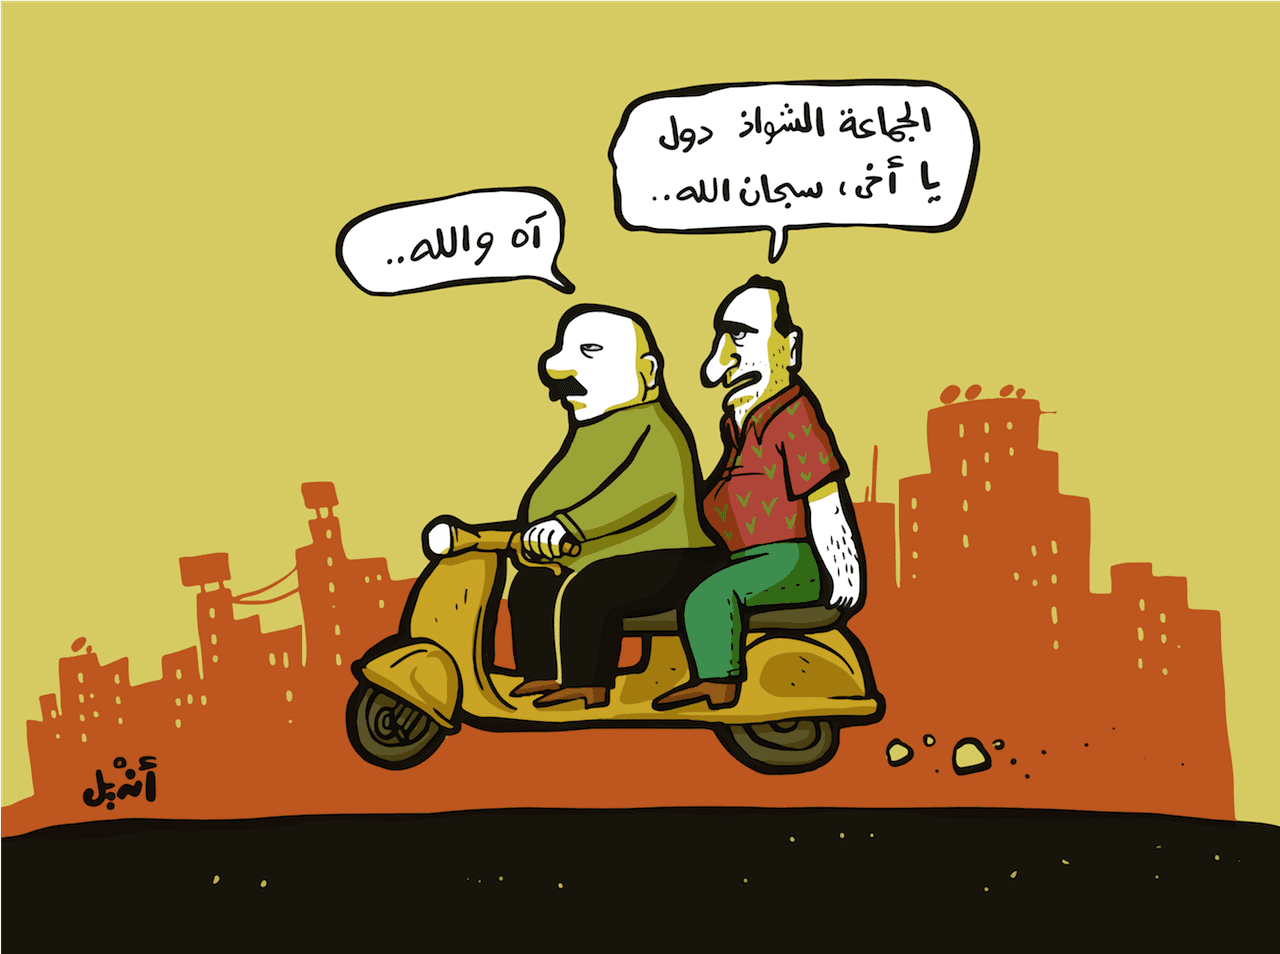 © Andeel, originally published in Mada Masr, 2014